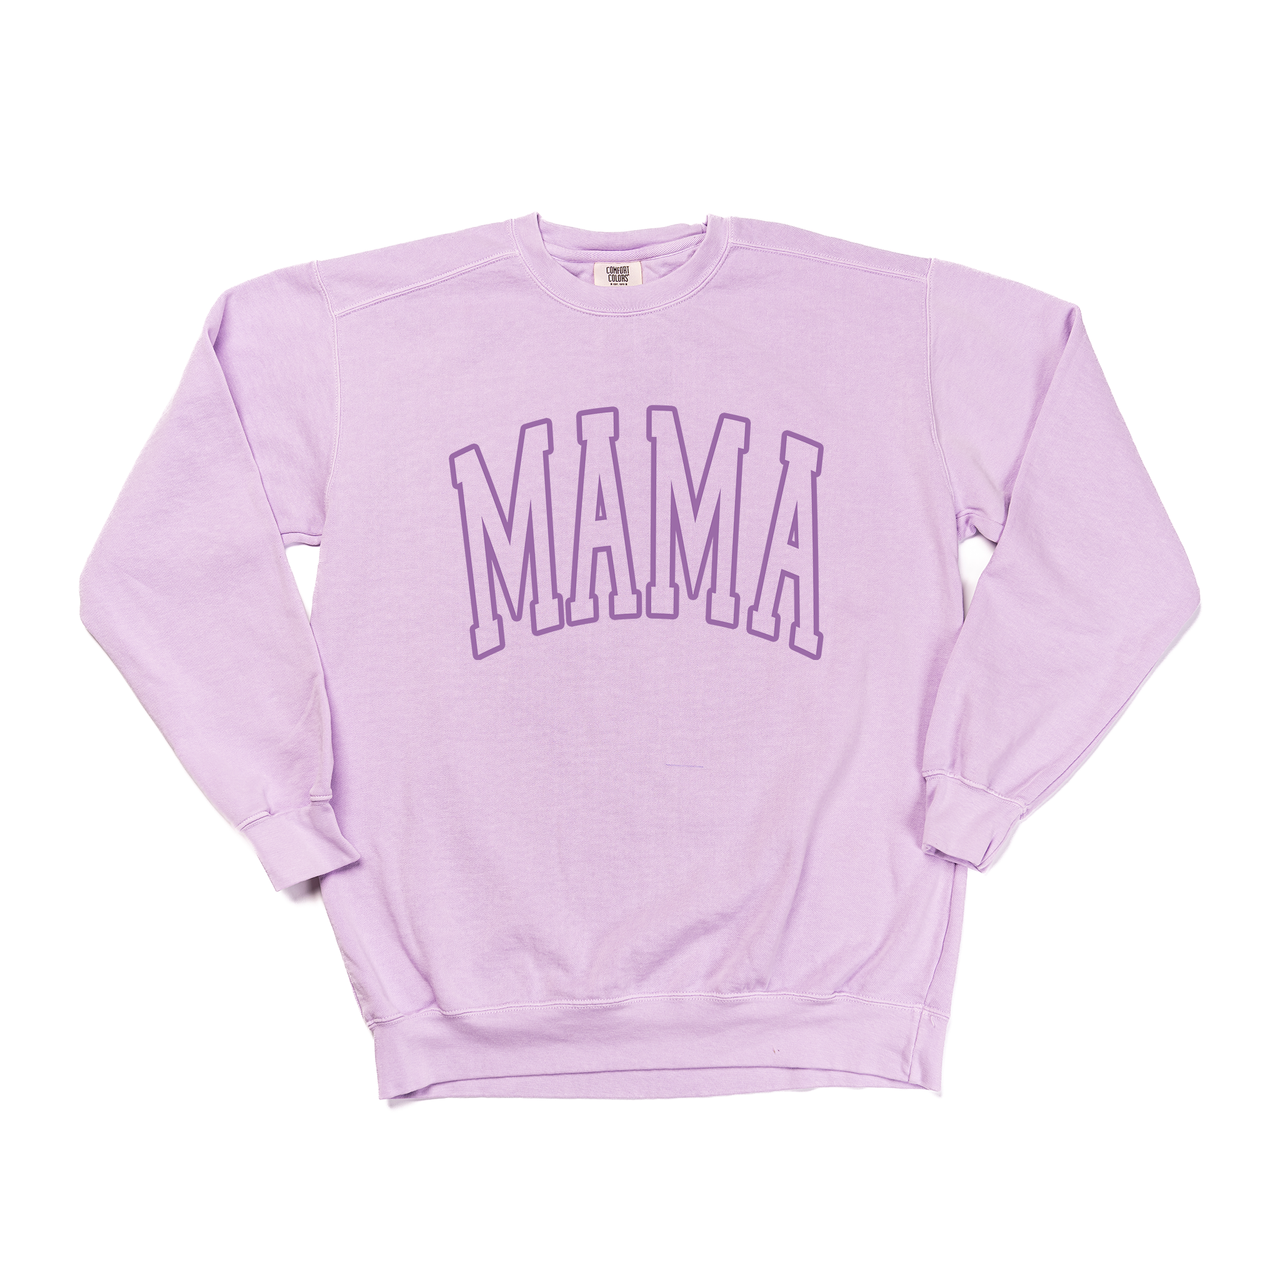 Mama Varsity - Sweatshirt (Pale Purple)